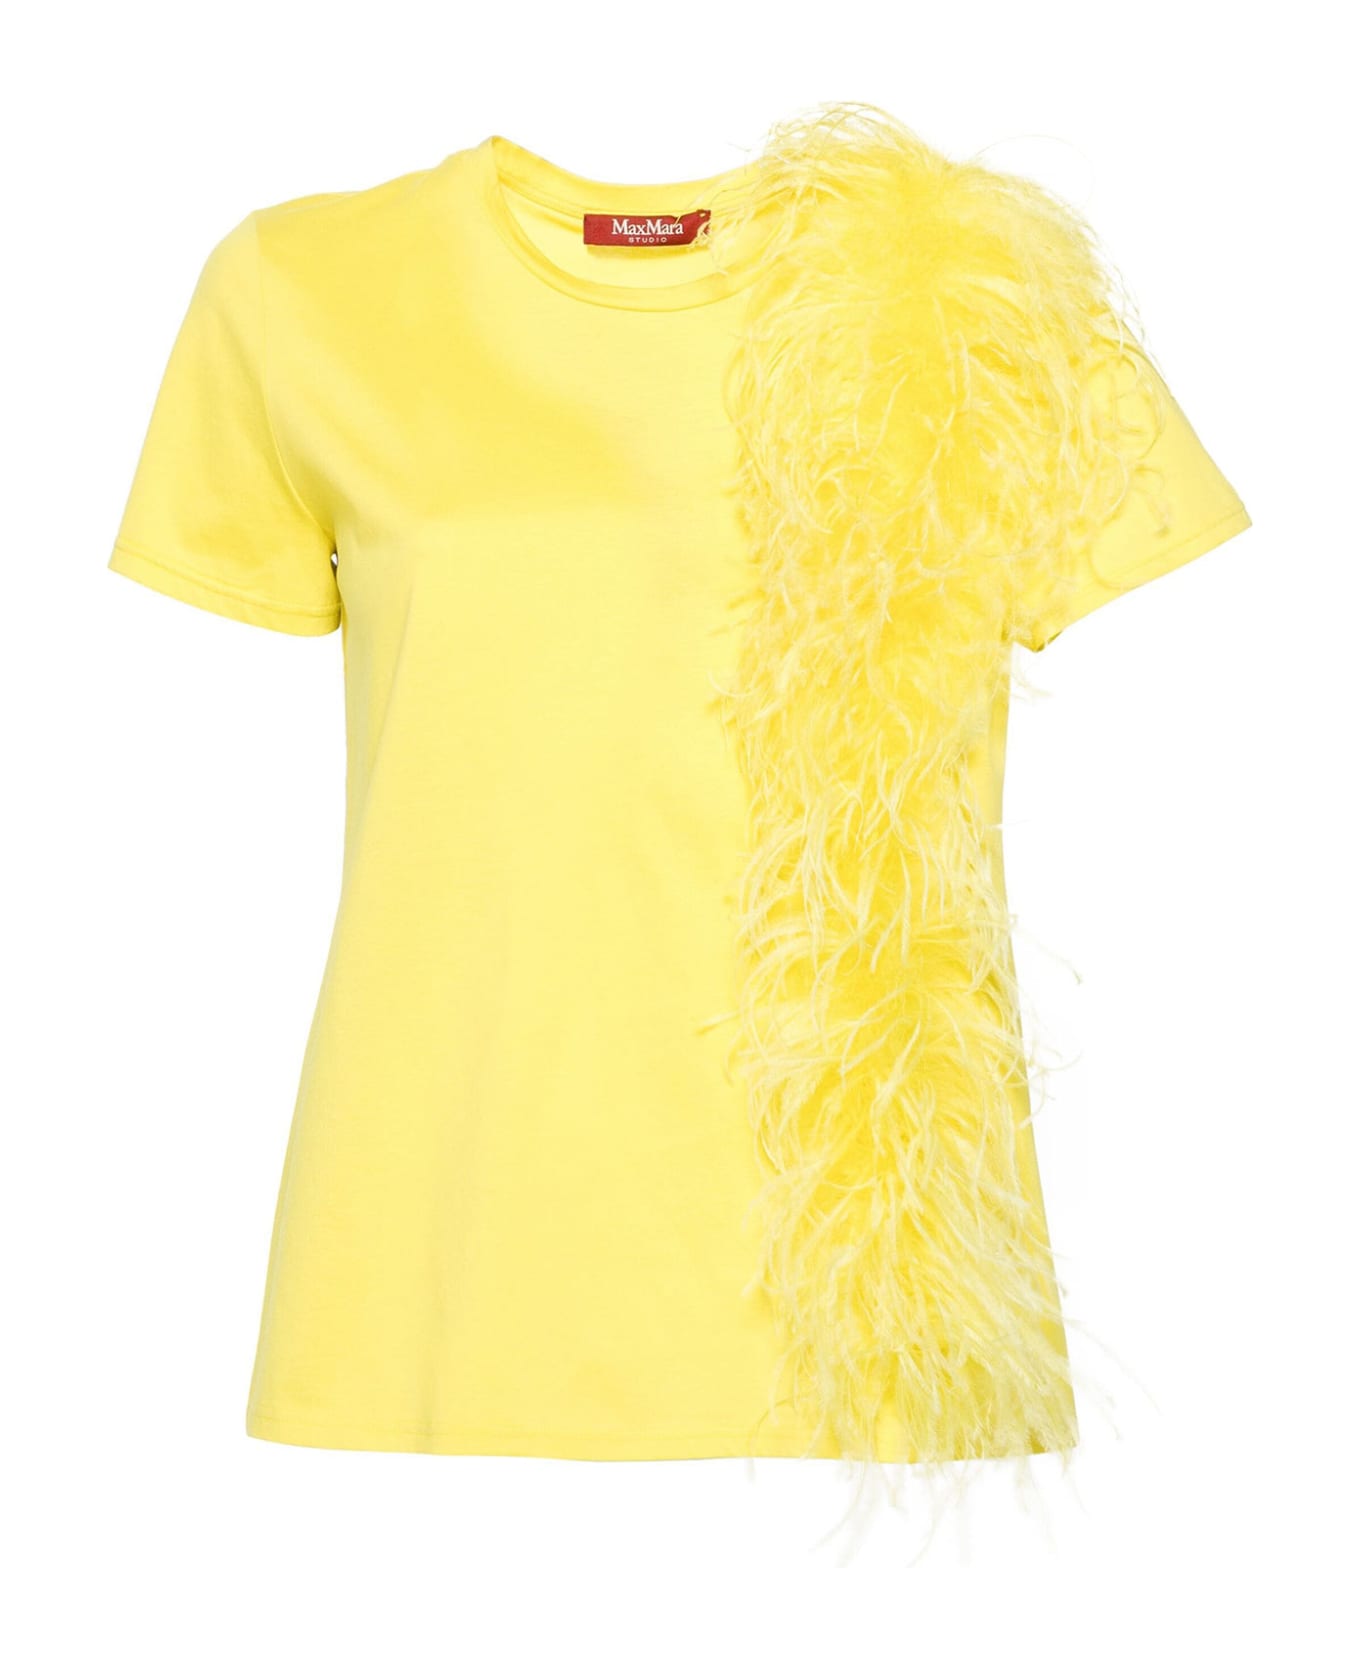 Max Mara Studio Yellow Cotton T-shirt - CEDRO